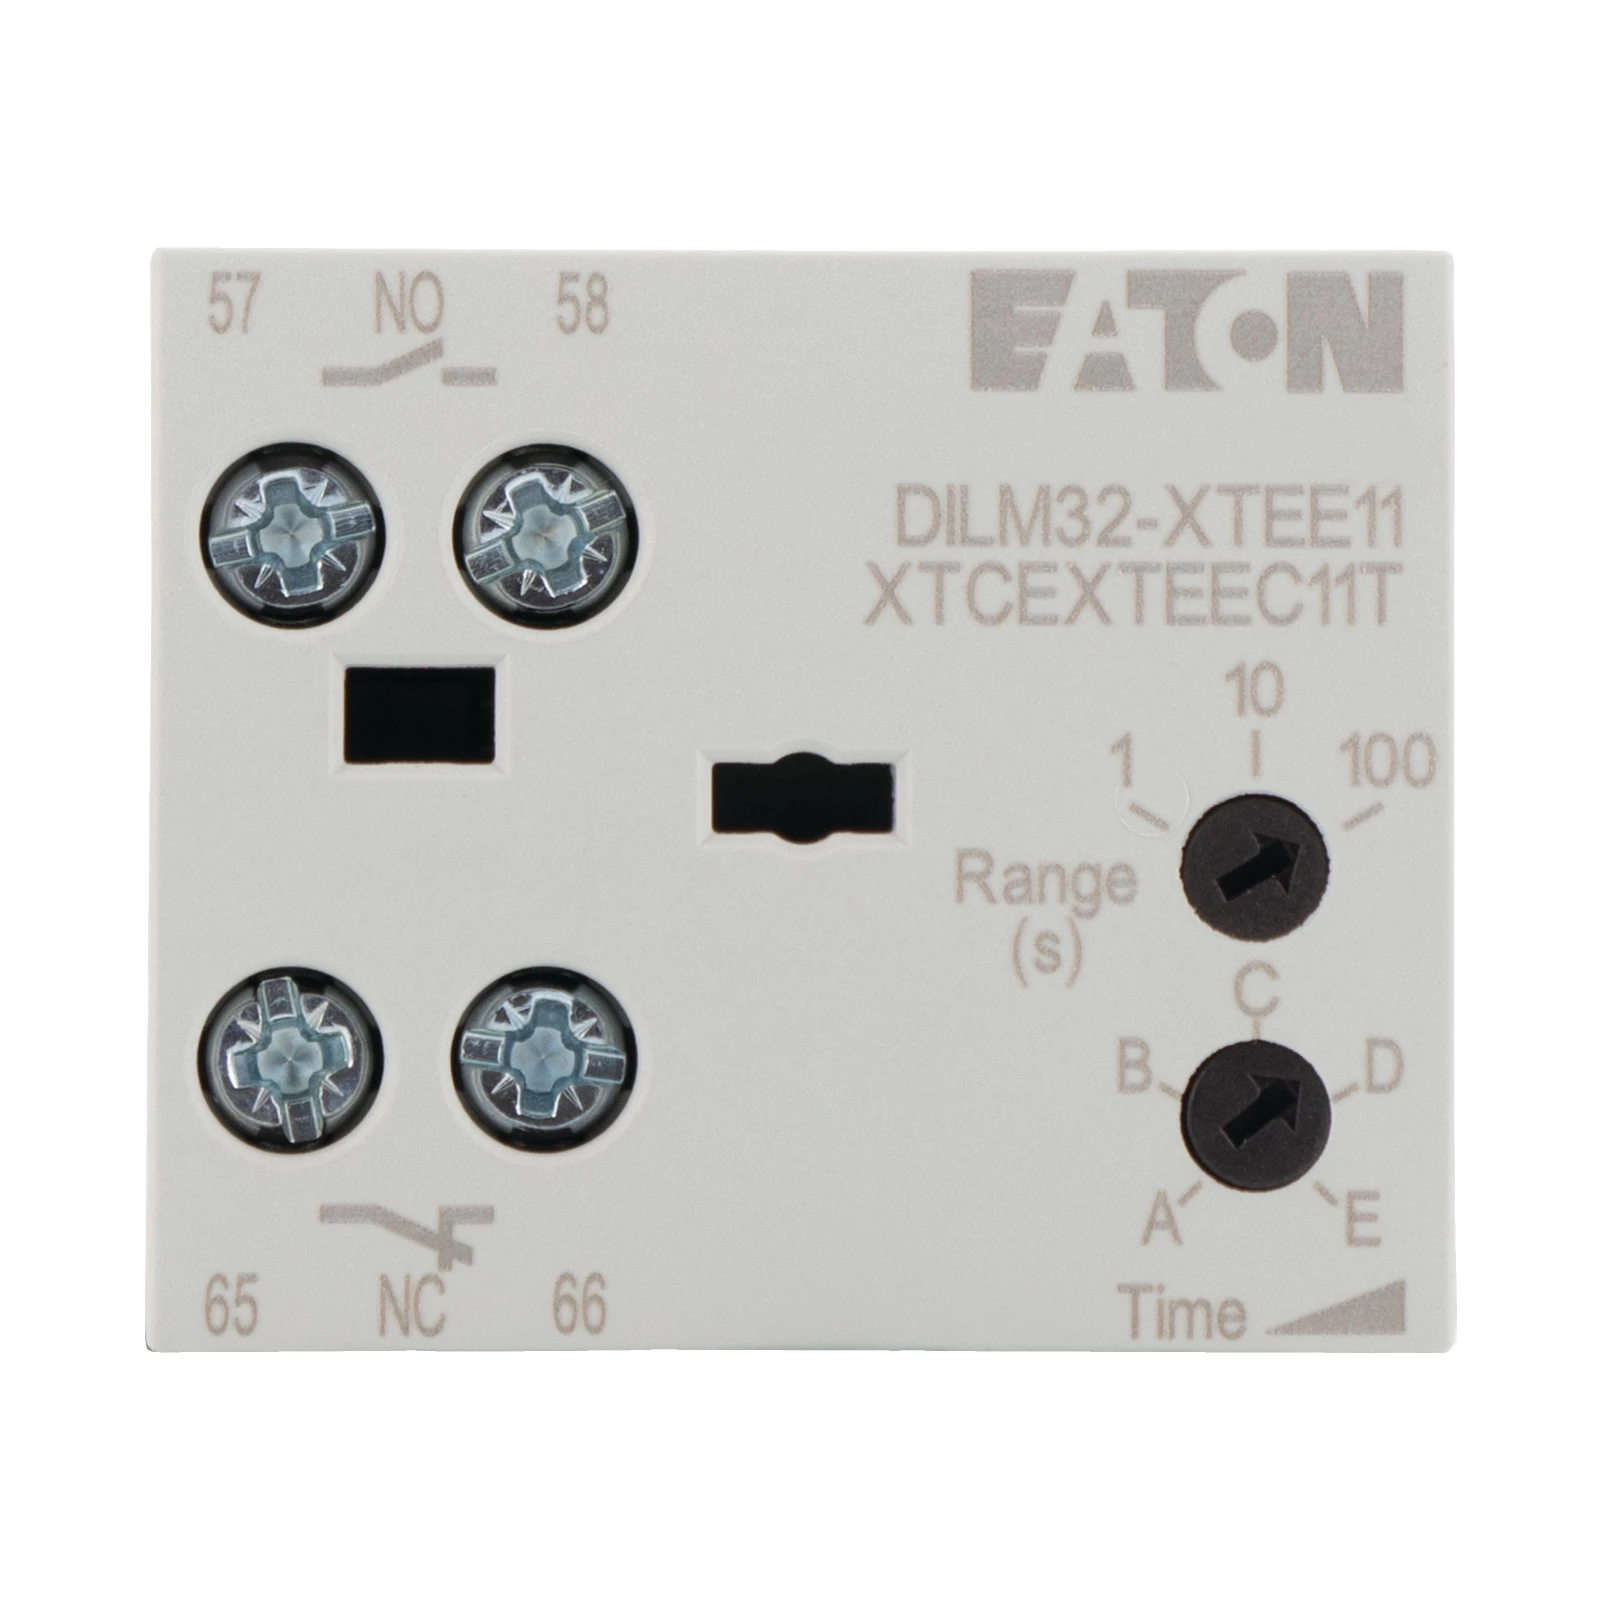 2062803 - Eaton DILM32-XTEE11(RAC130)